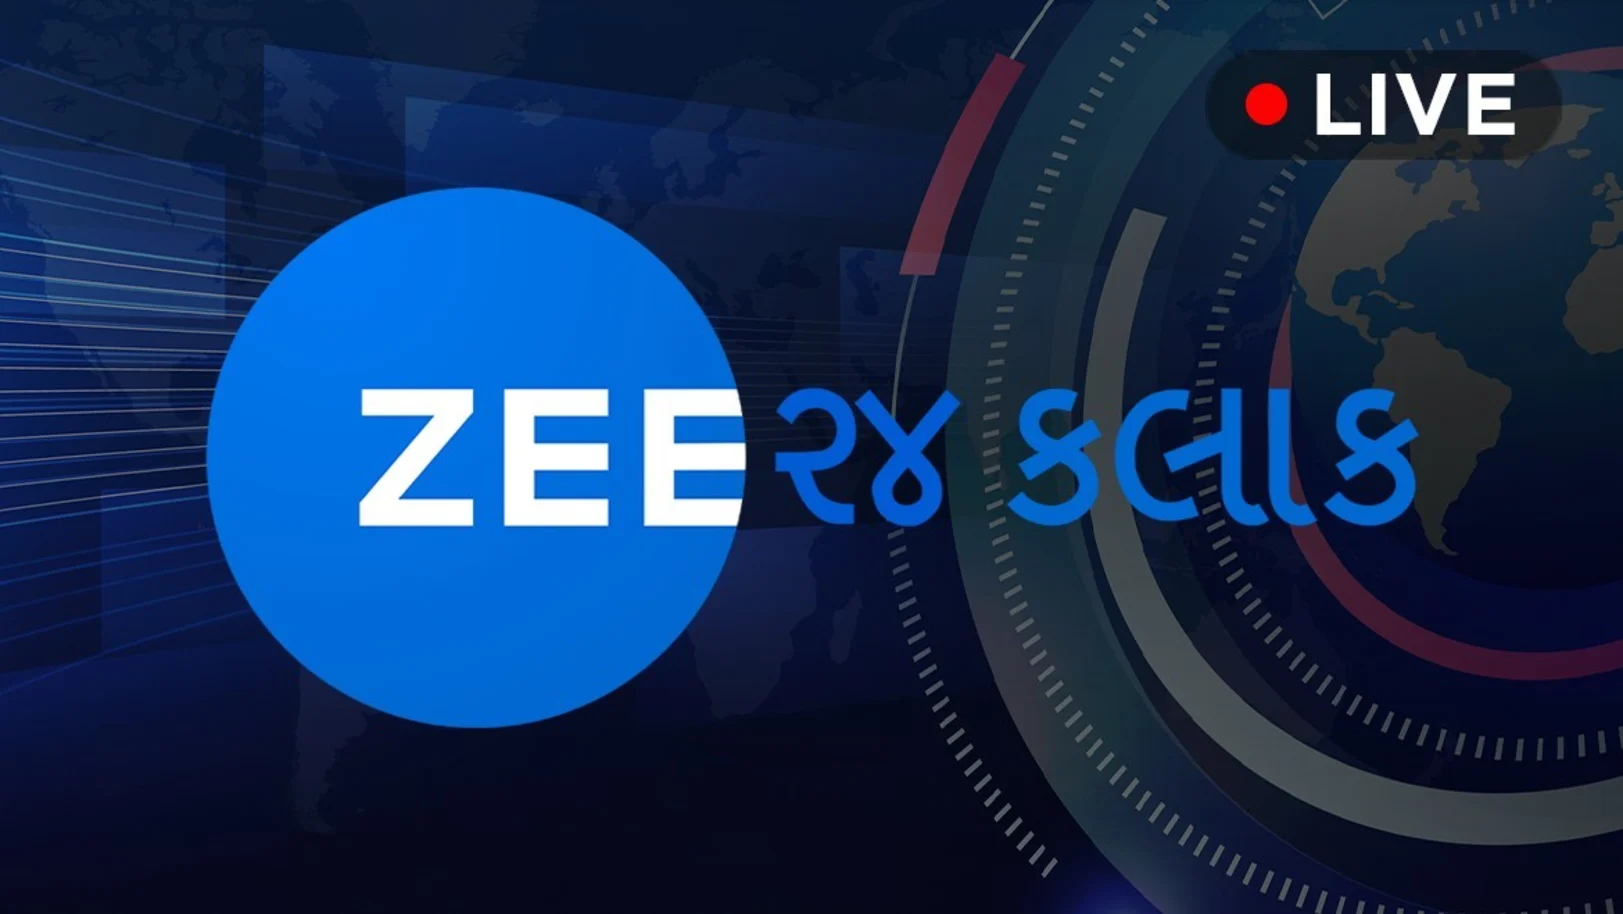 Zee 24 Kalak Live TV